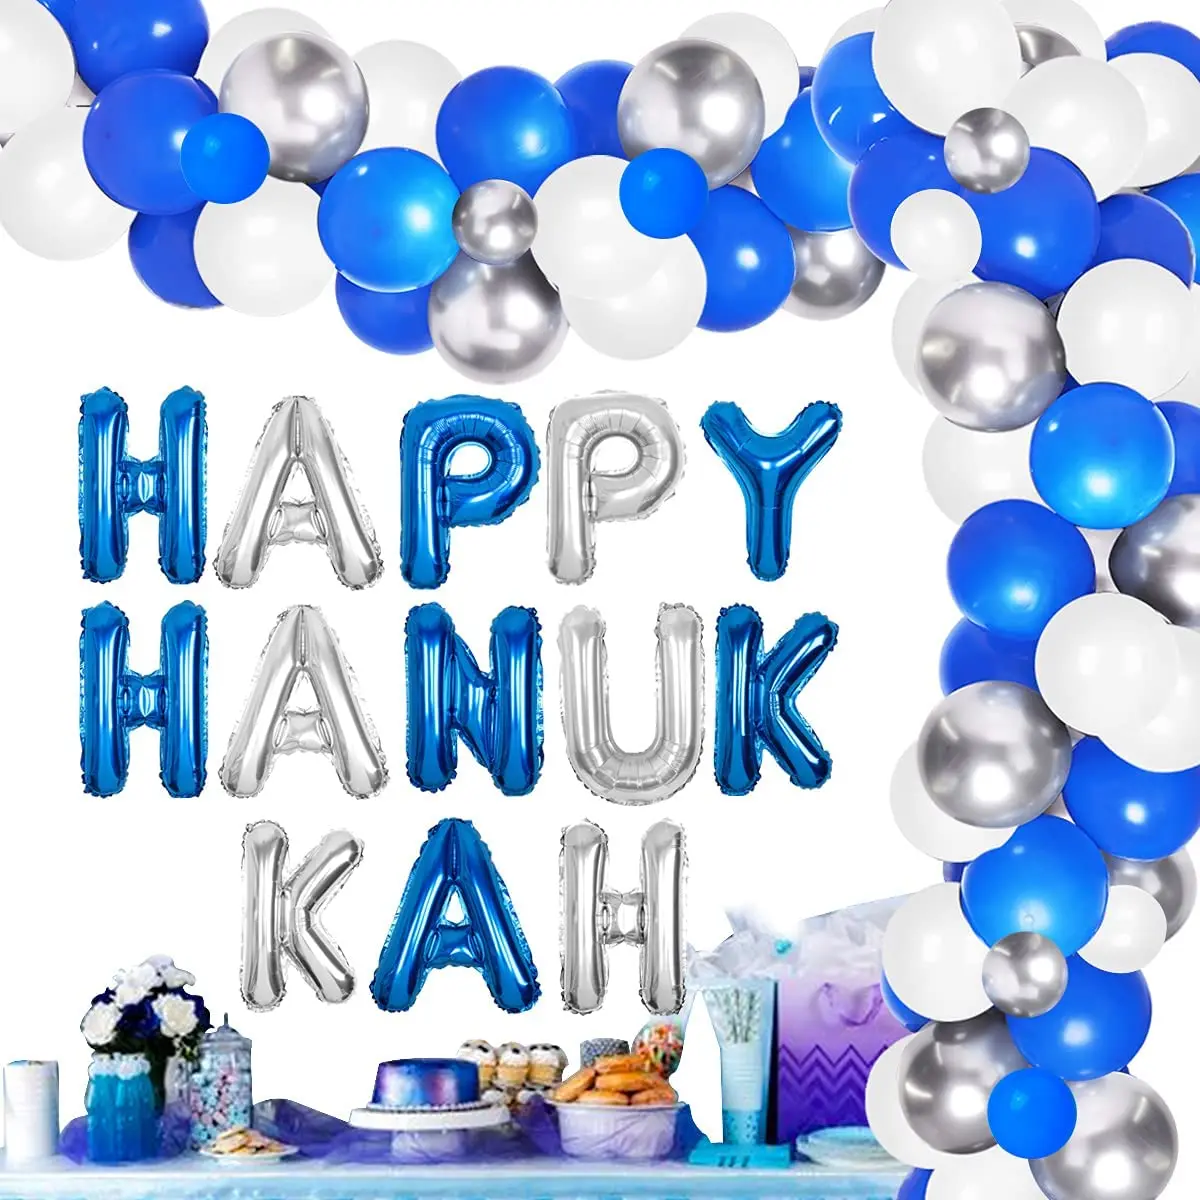 

JOYMEMO Happy Hanukkah Decorations Blue Sliver Balloon Garland Kit HAPPY HANUKKAH Banner for Jewish Holiday Chanukah Decor